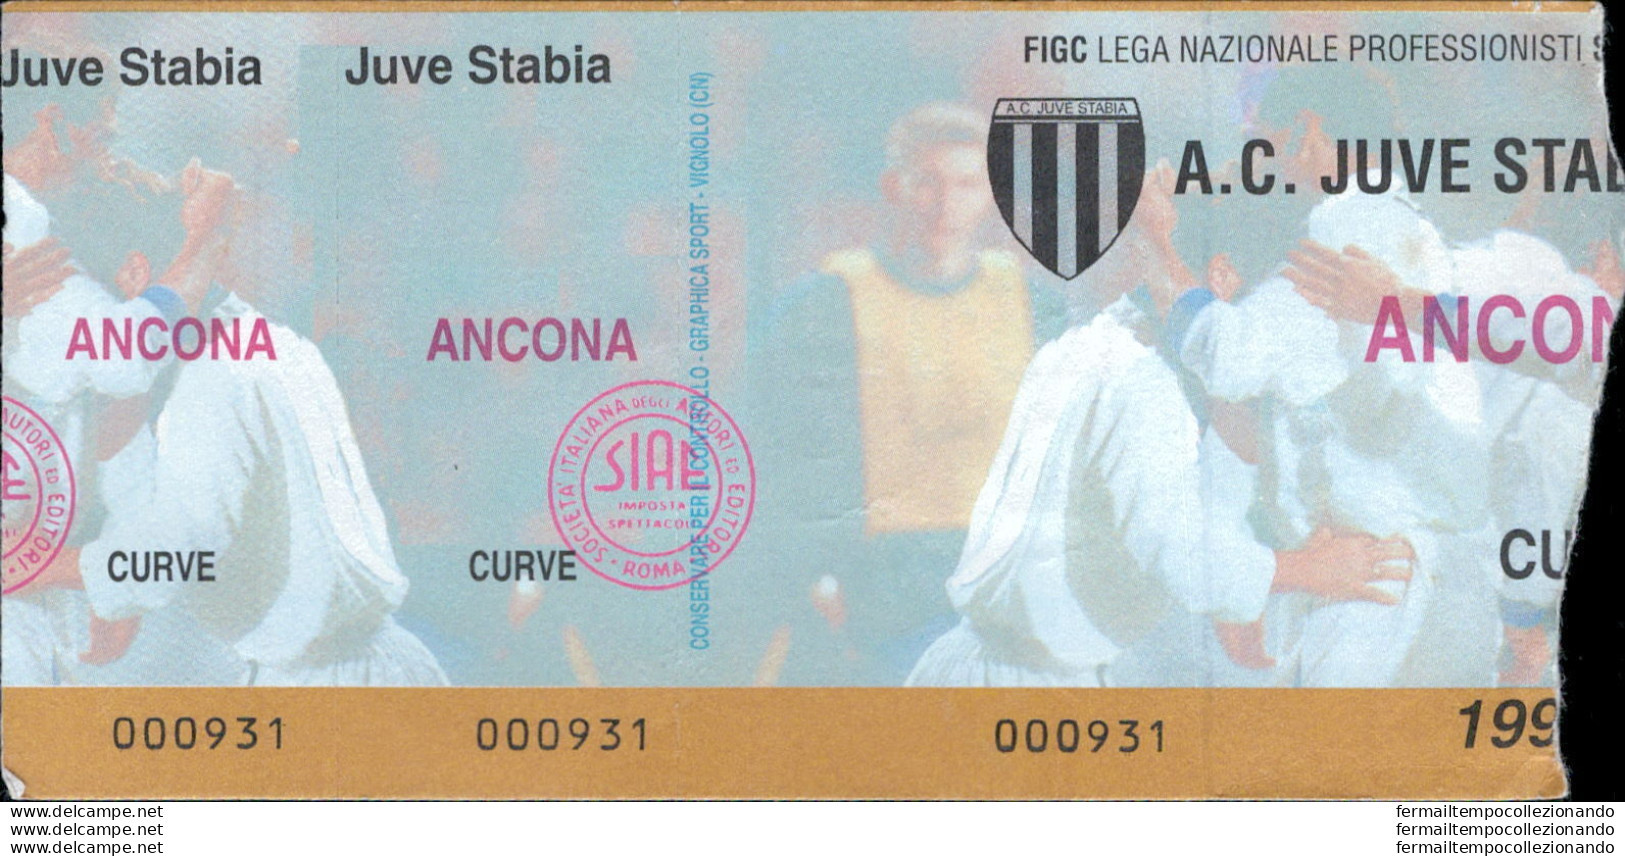 Bl69 Biglietto Calcio Ticket Juve Stabia - Ancona - Tickets - Vouchers